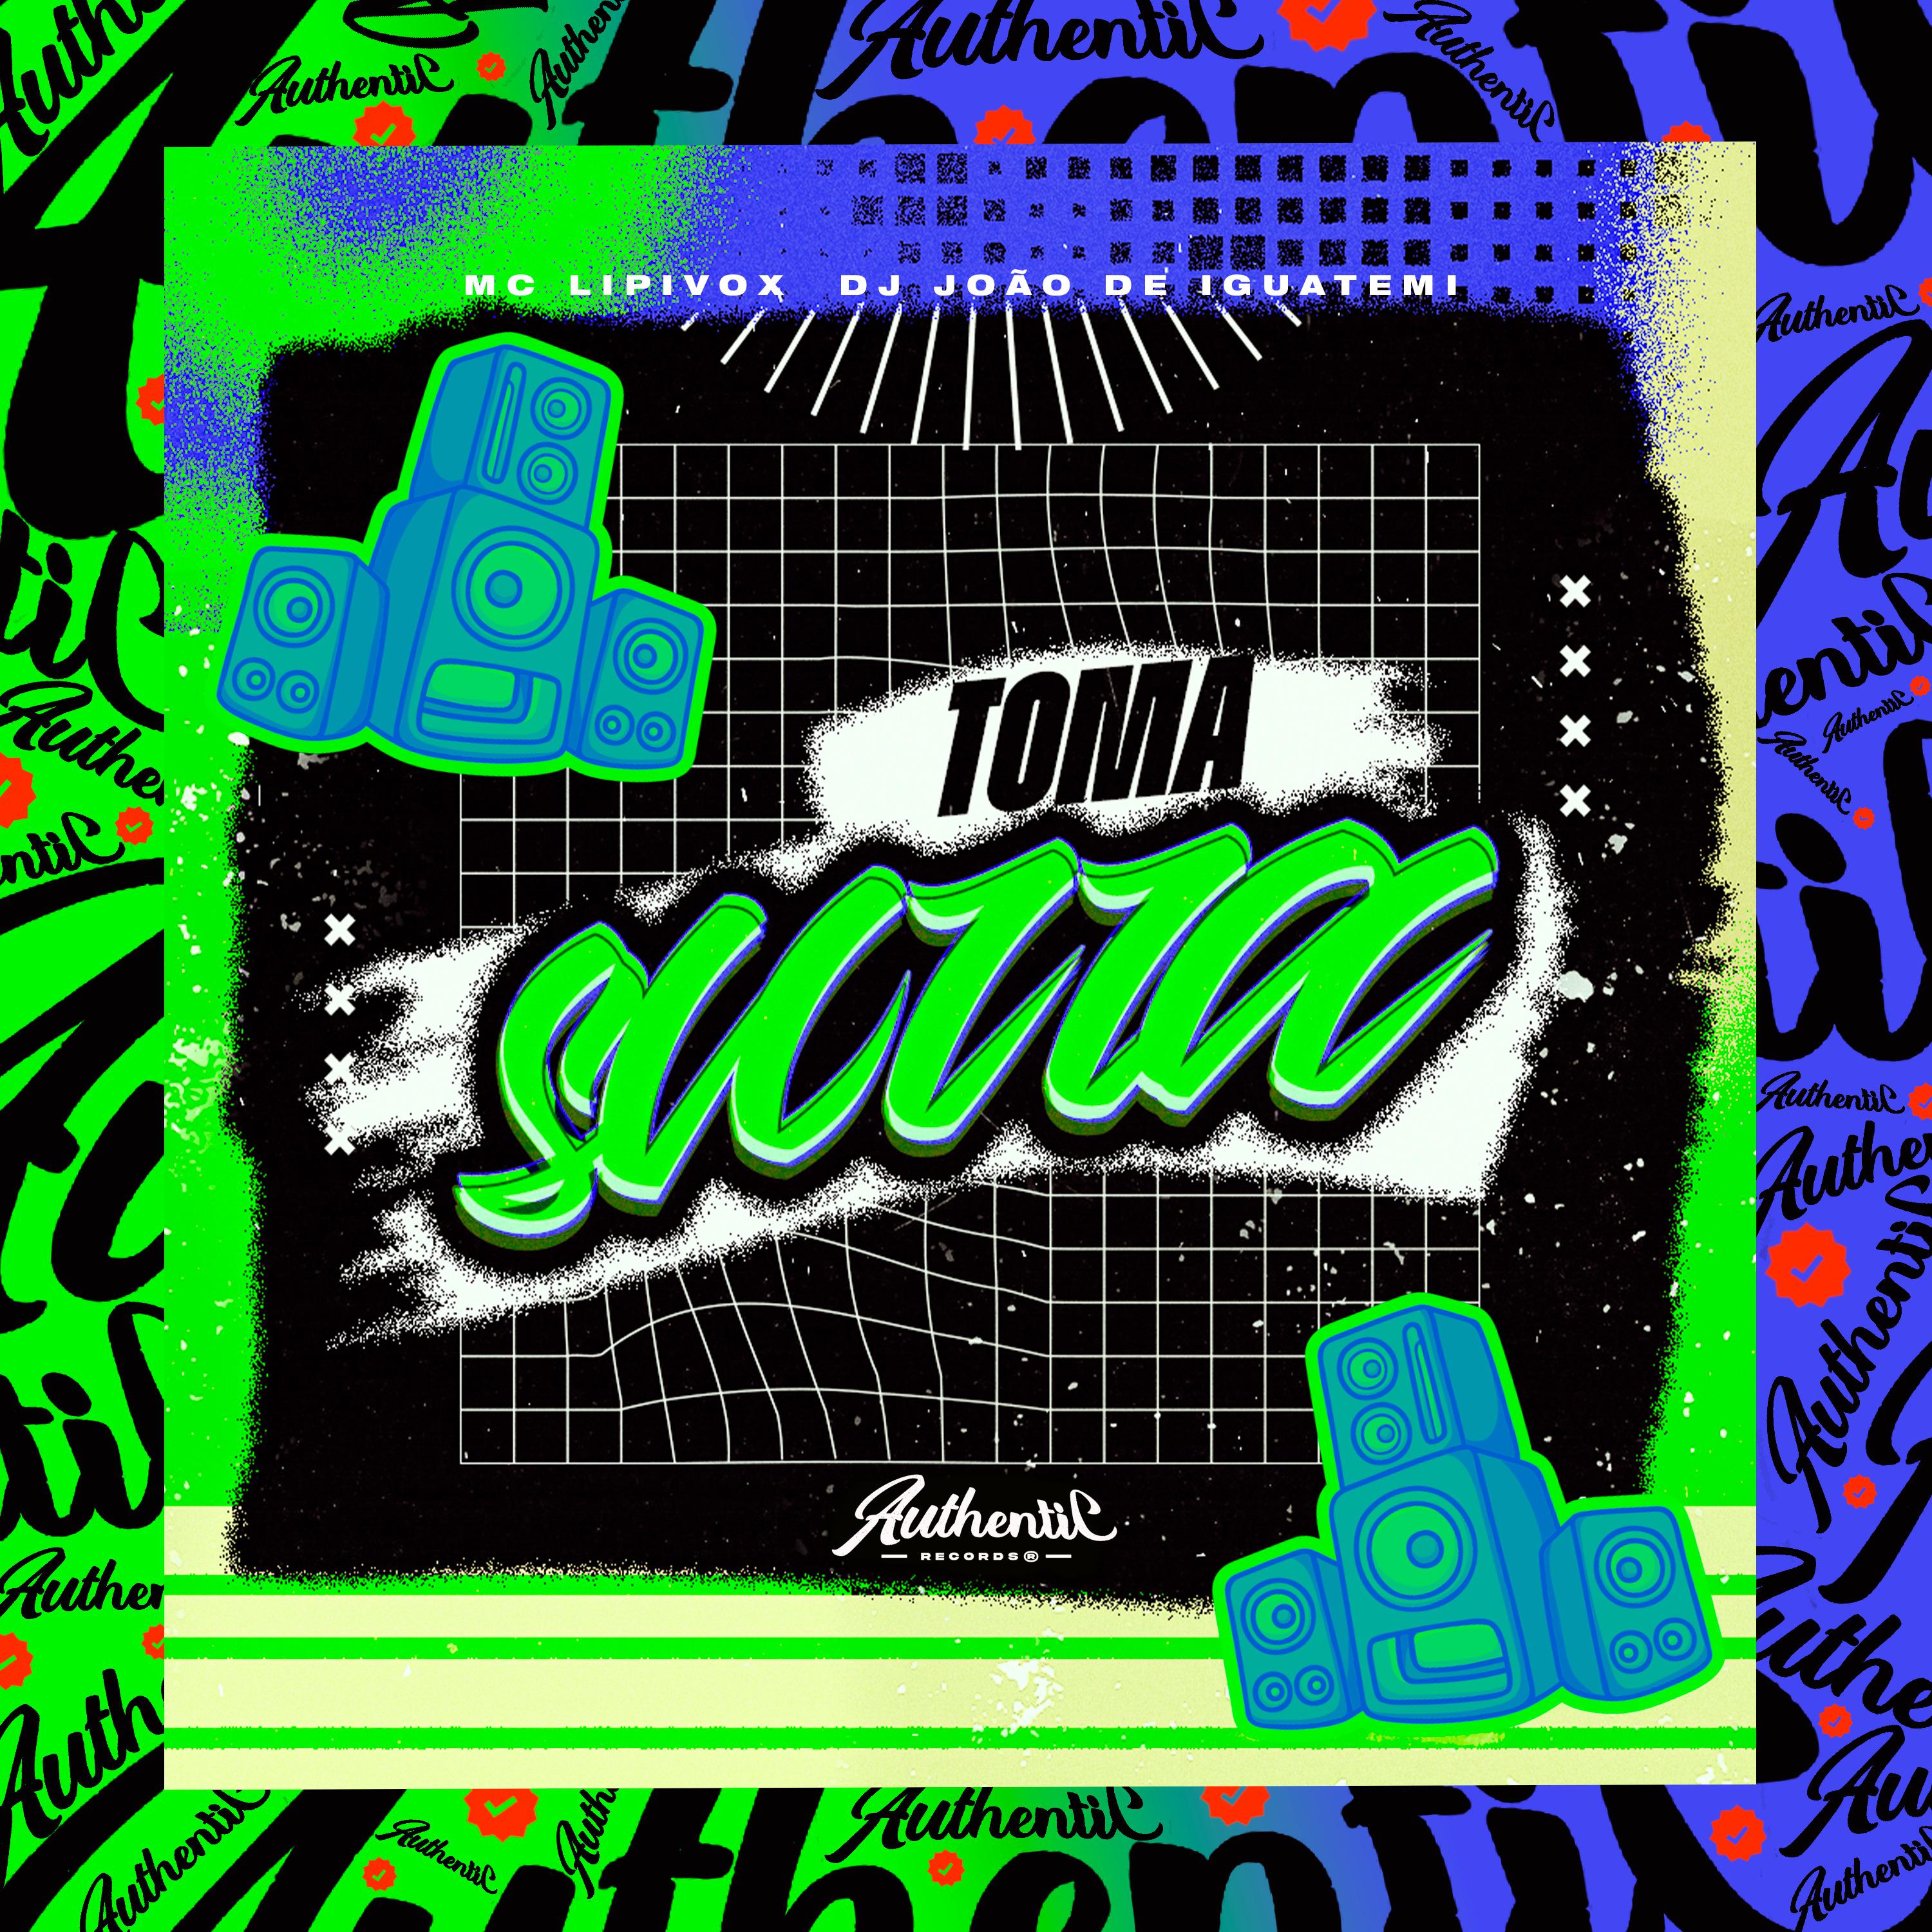 Постер альбома Toma Surra